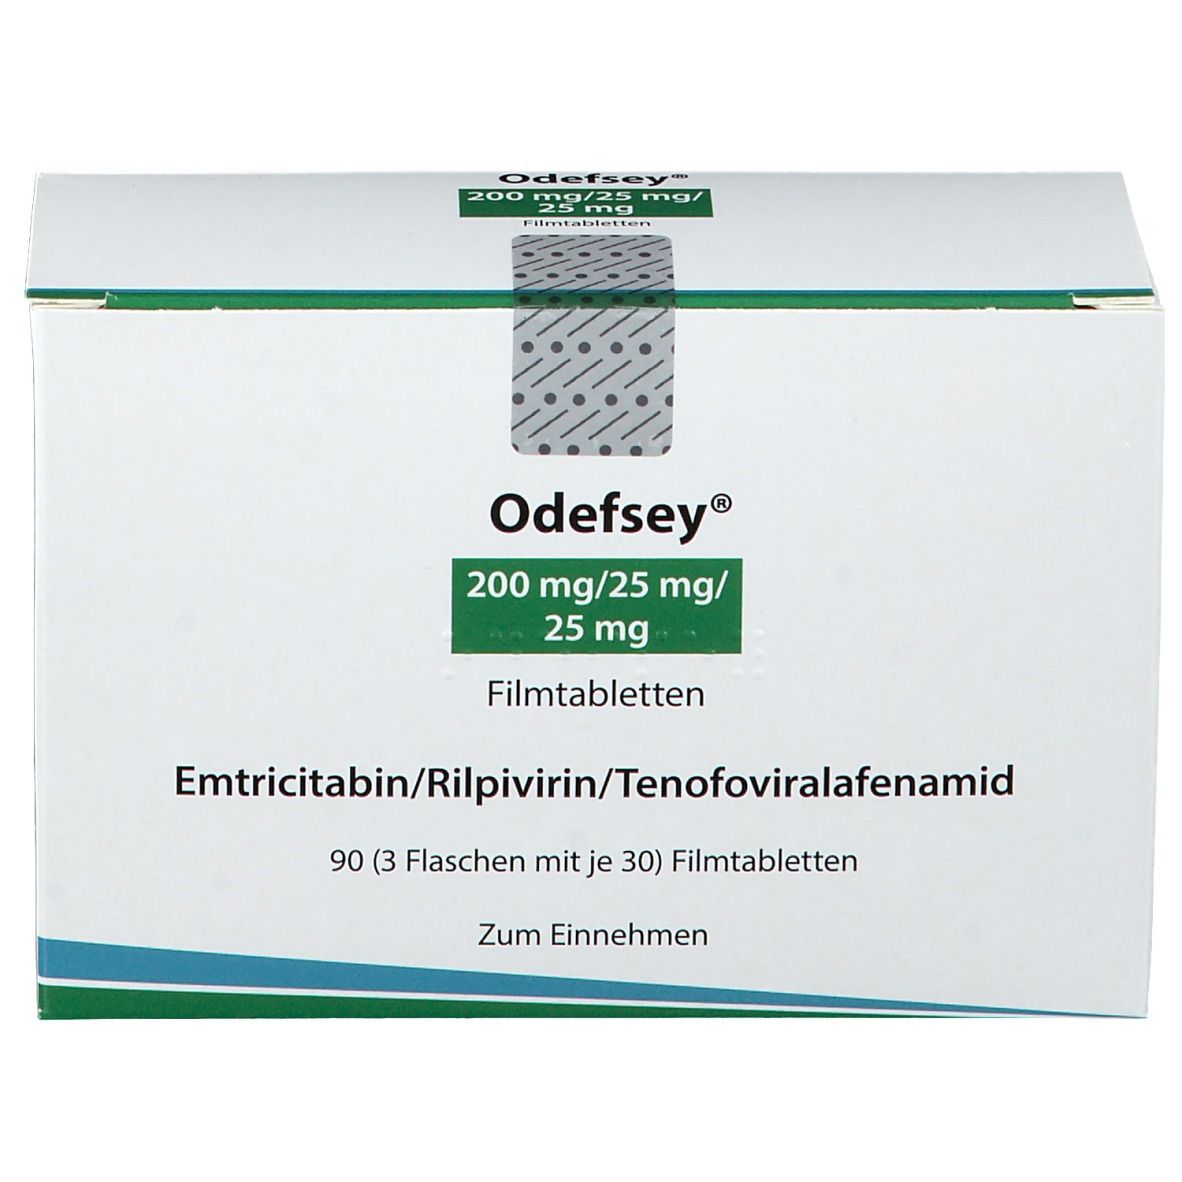 Odefsey® 200 mg/25 mg/25 mg